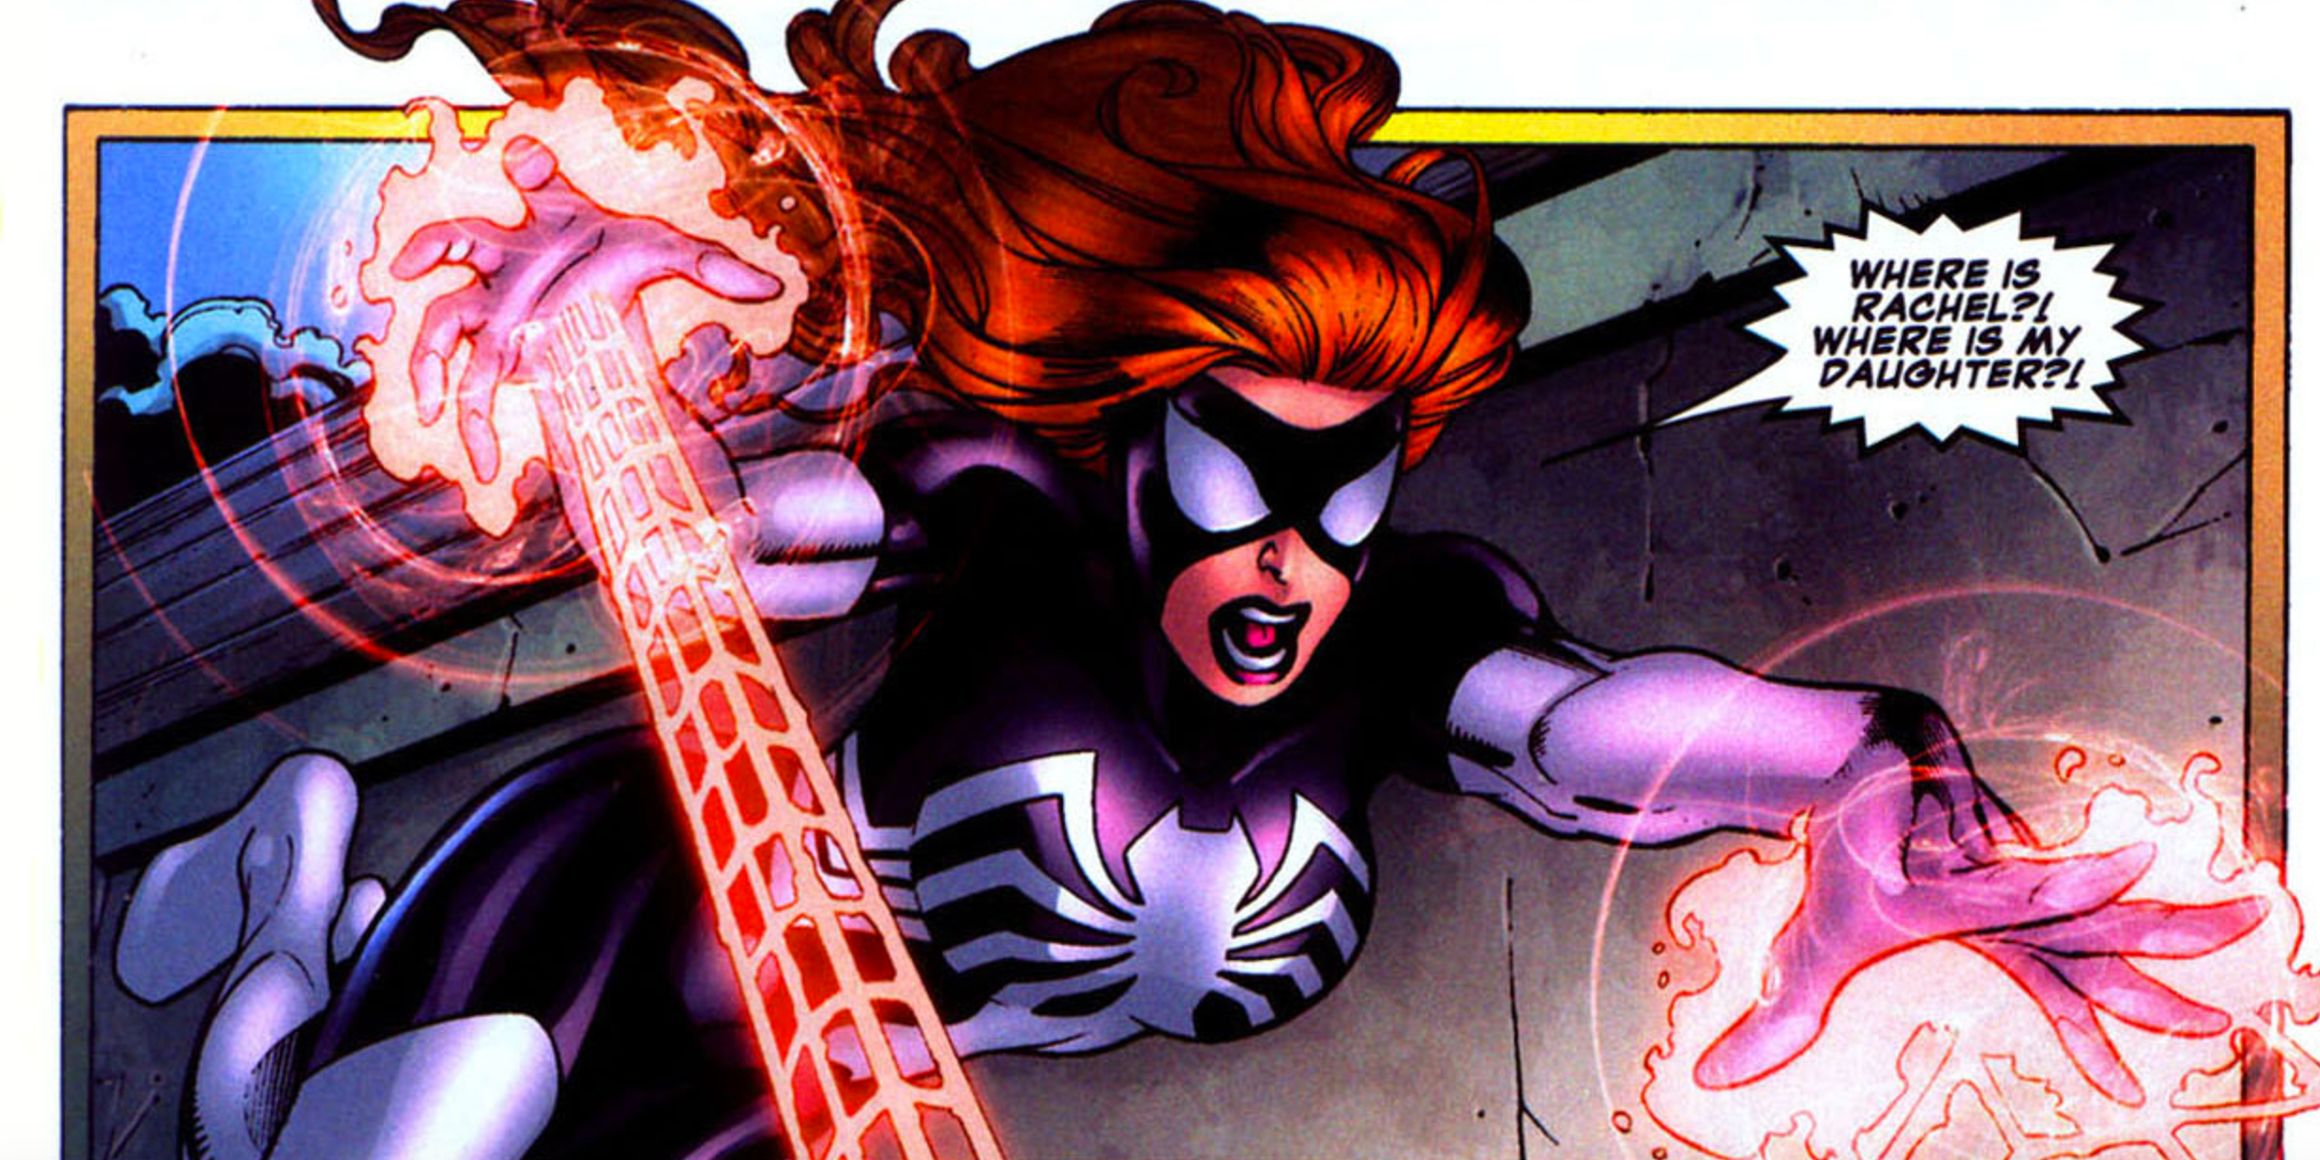 Julia Carpenter using her powers in Marvel Comics